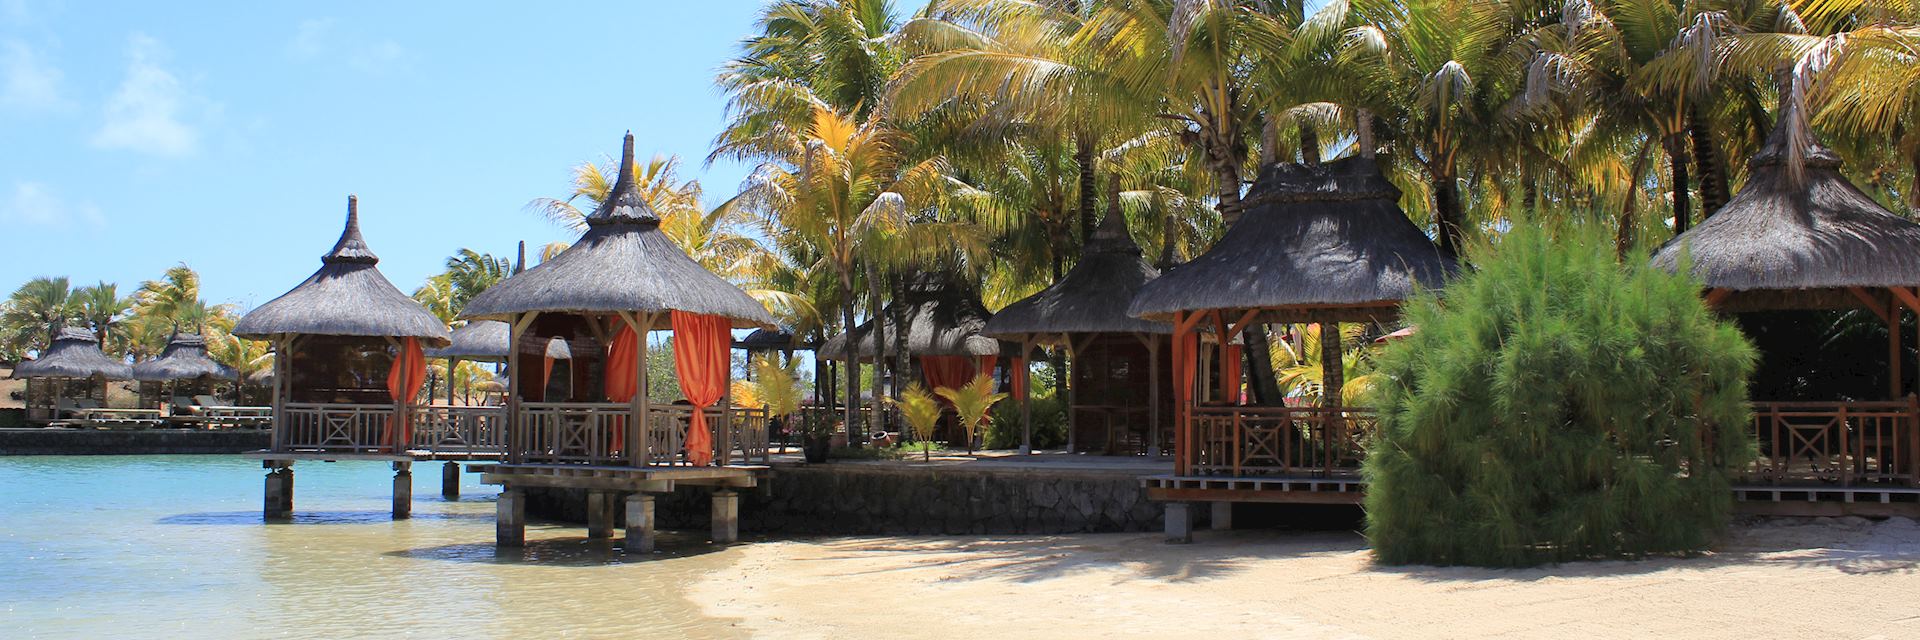 Beach huts in Mauritius